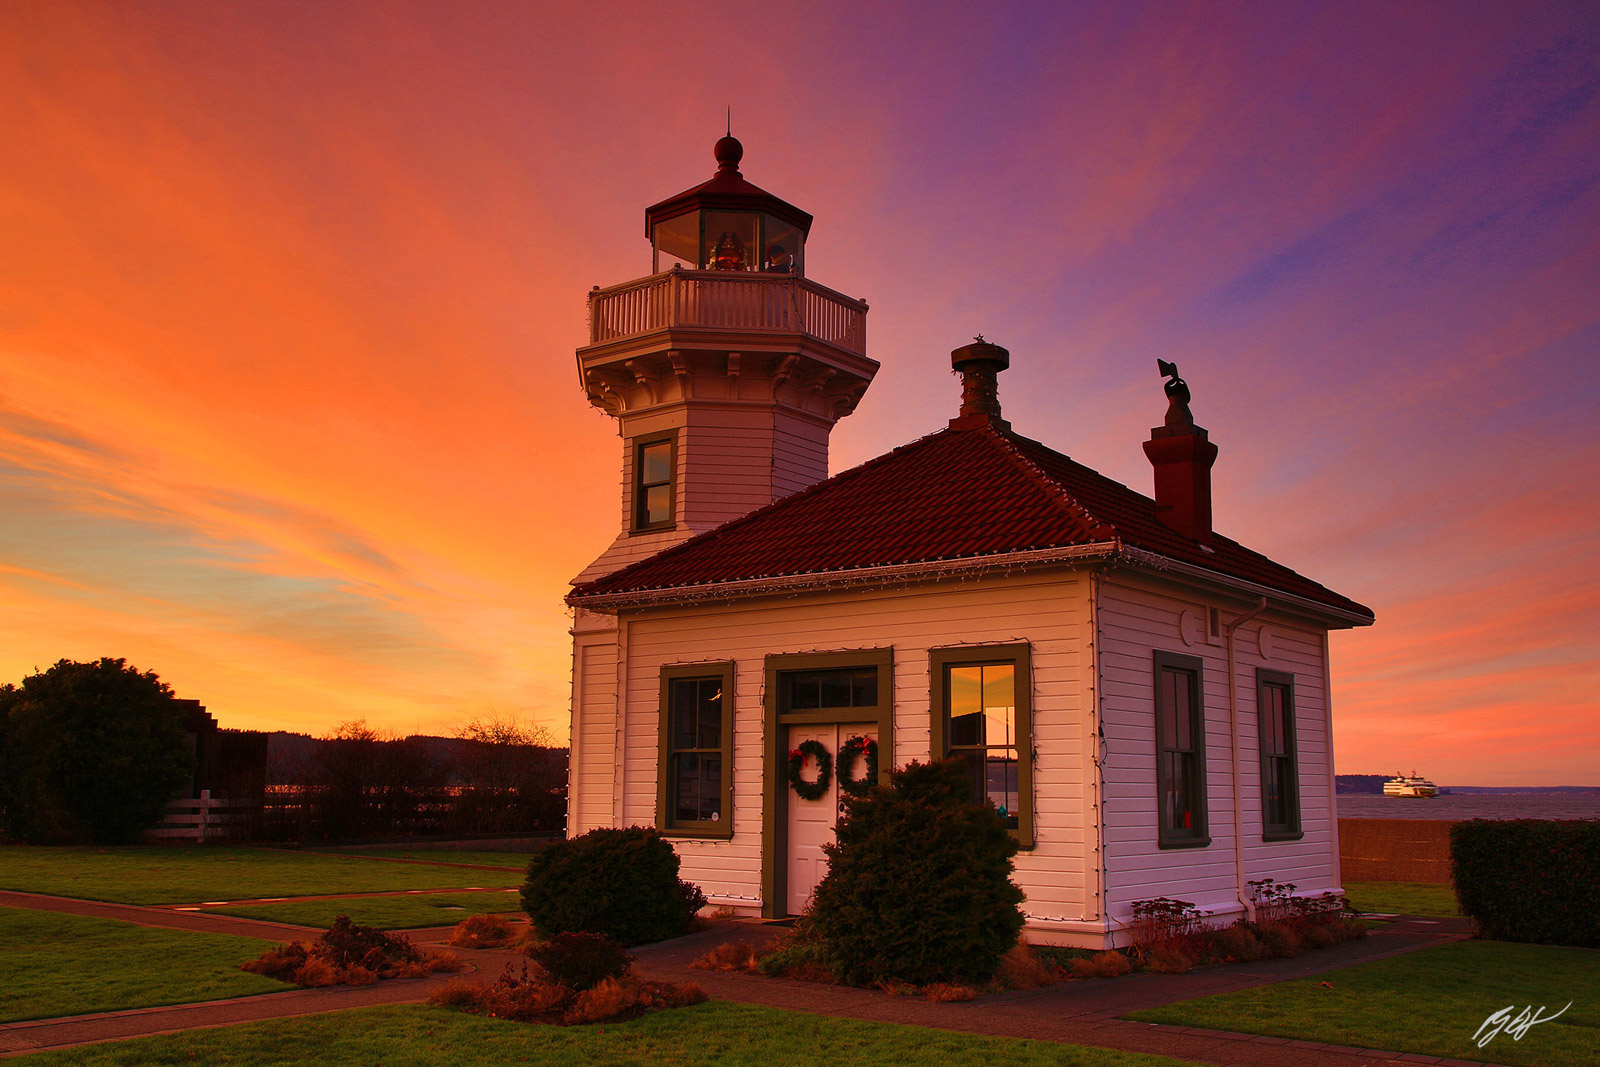 Sunset Mukilteo Lighthouse in Mukilteo Lighthouse Park in Washington